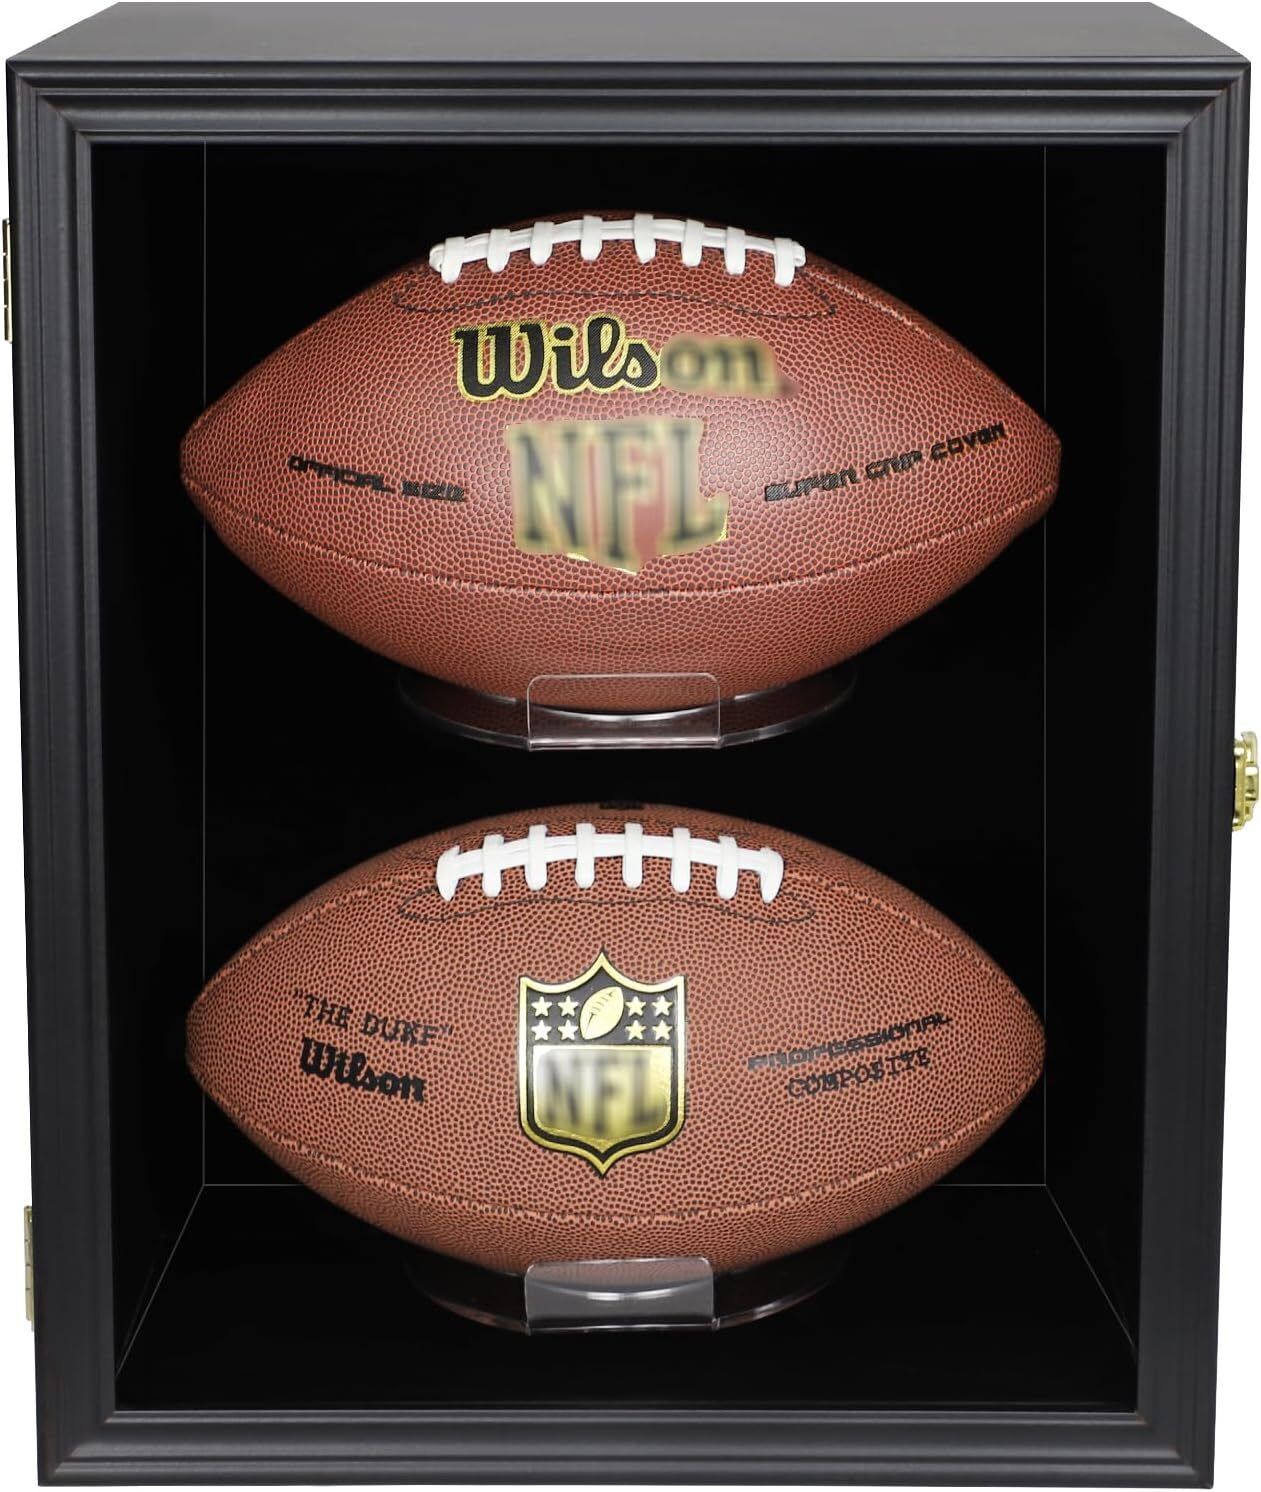 Medikaison 2 Football Display Case Wall Mount Double Ball Black, Black 